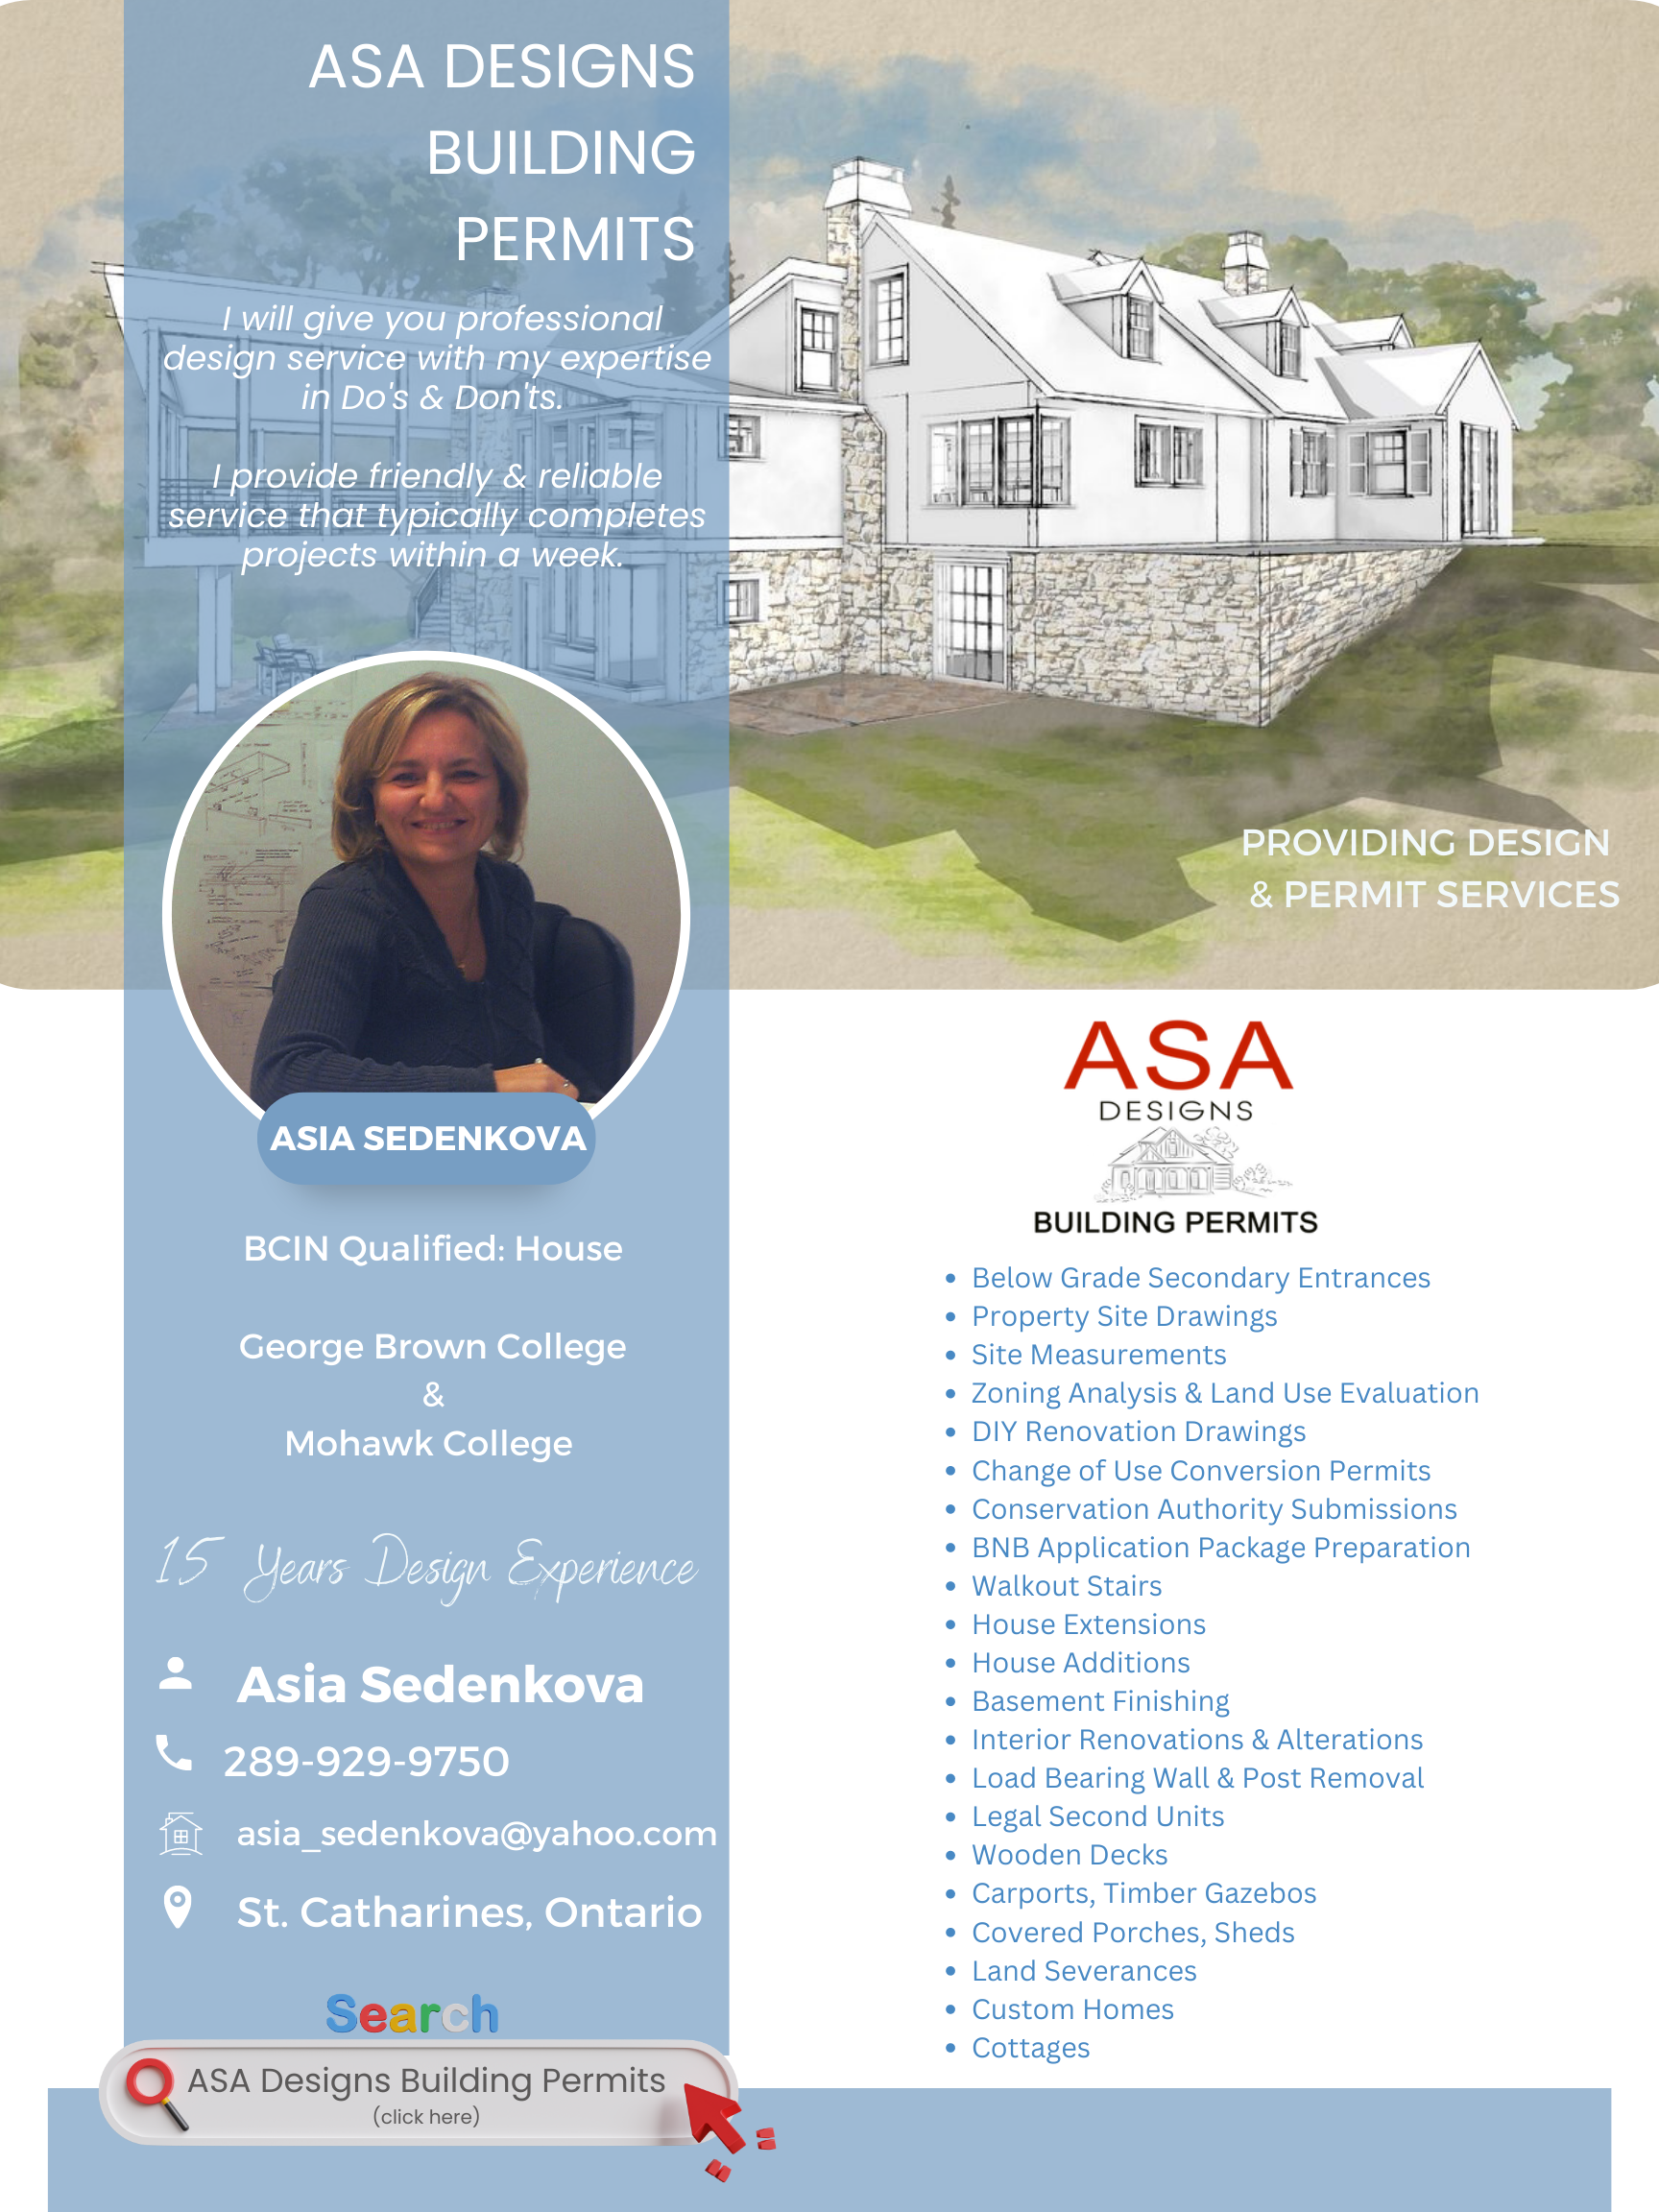 ASA Designs Buildings Permits